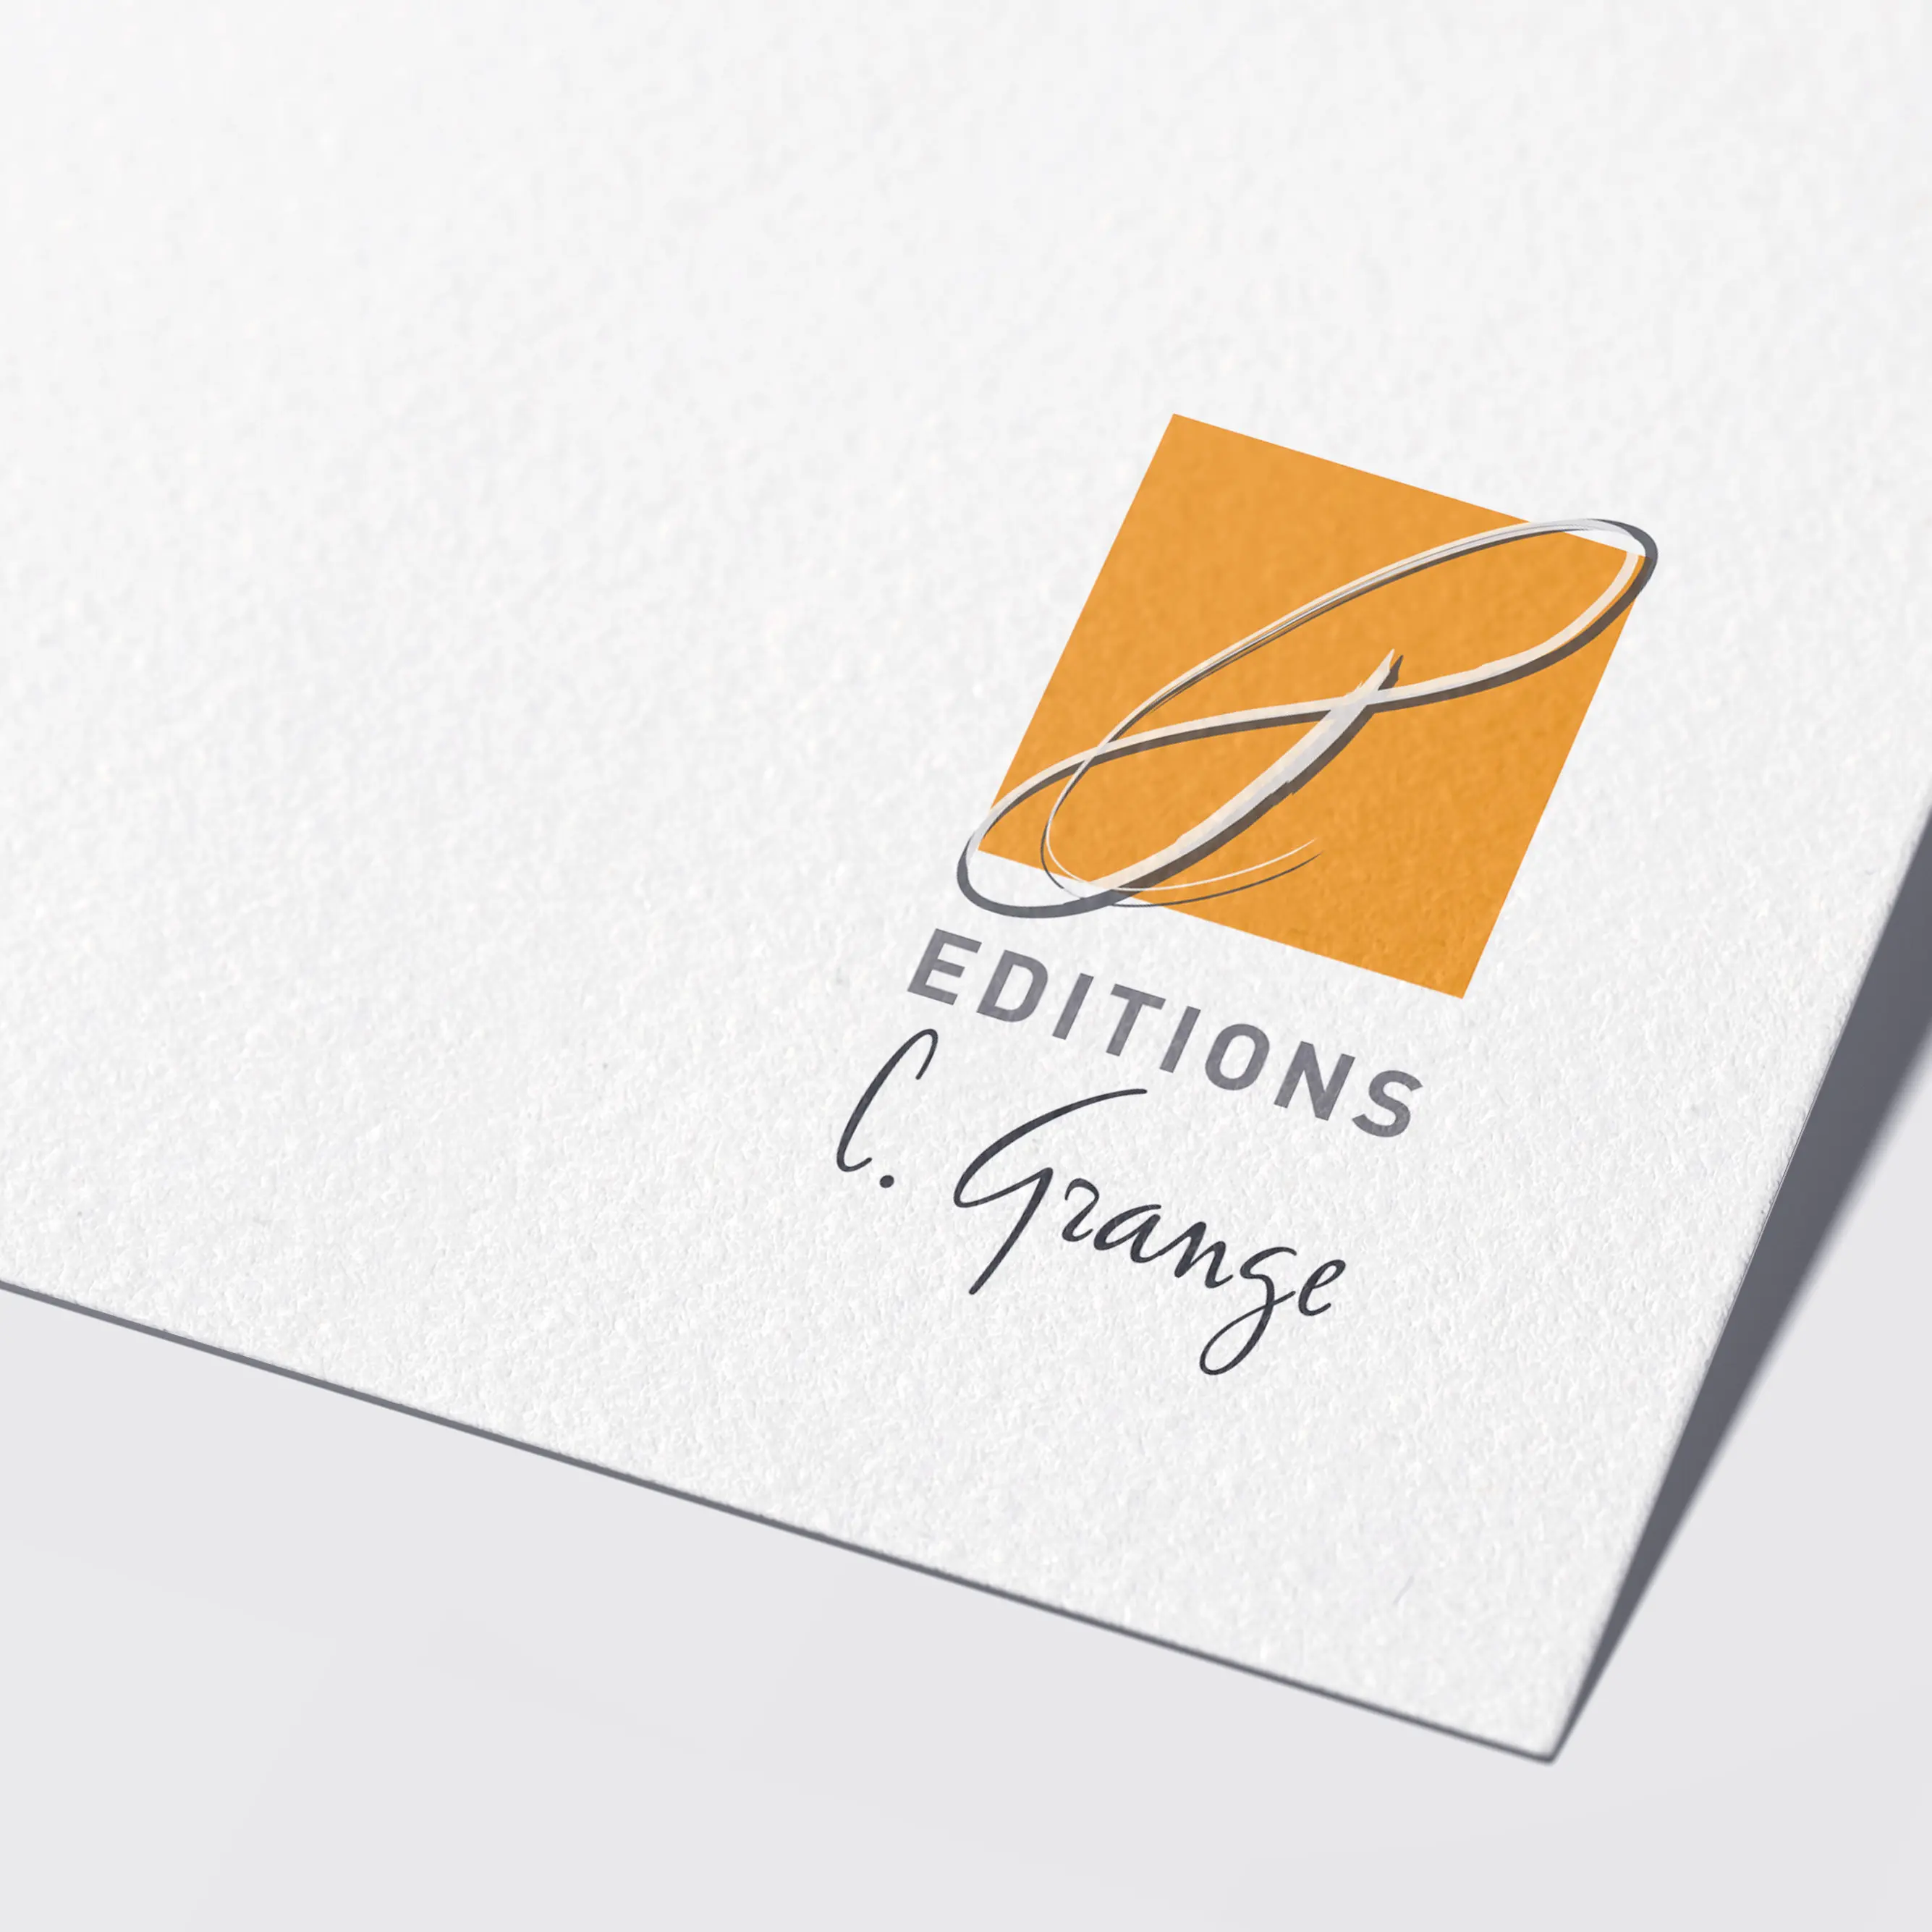 logo editions C. Grange